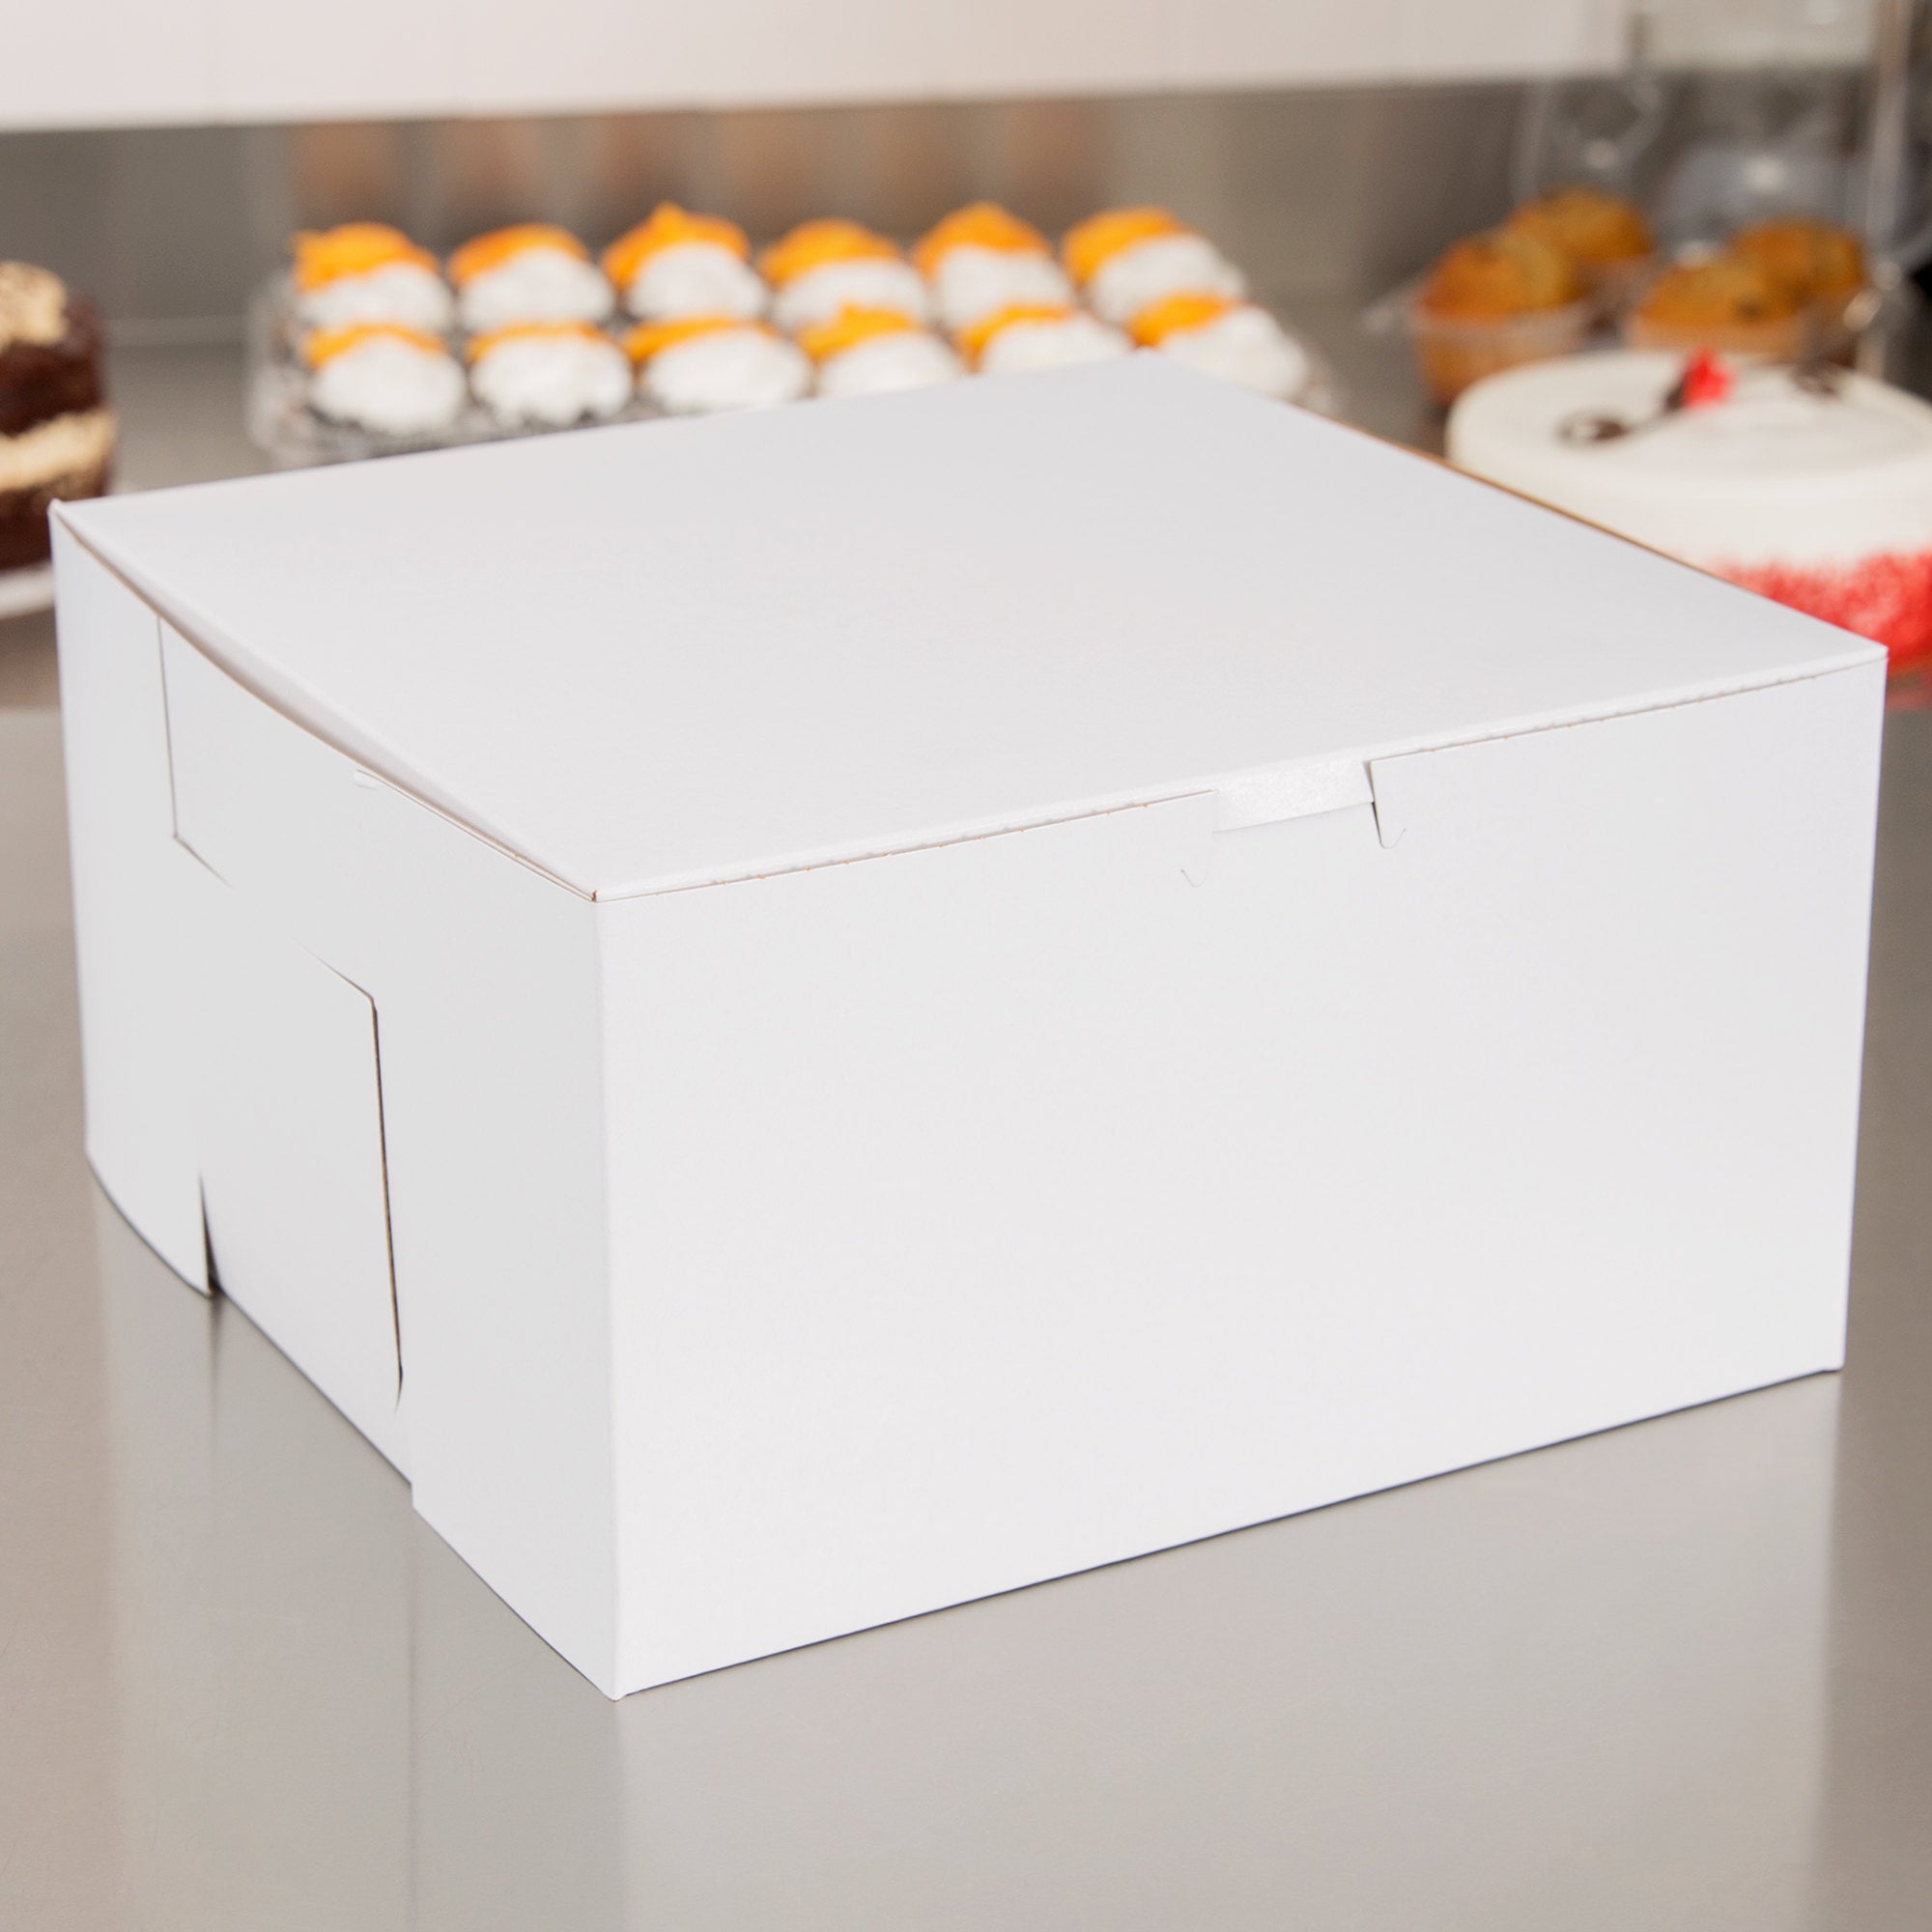 10 Inch Cake Box - 10x10x6